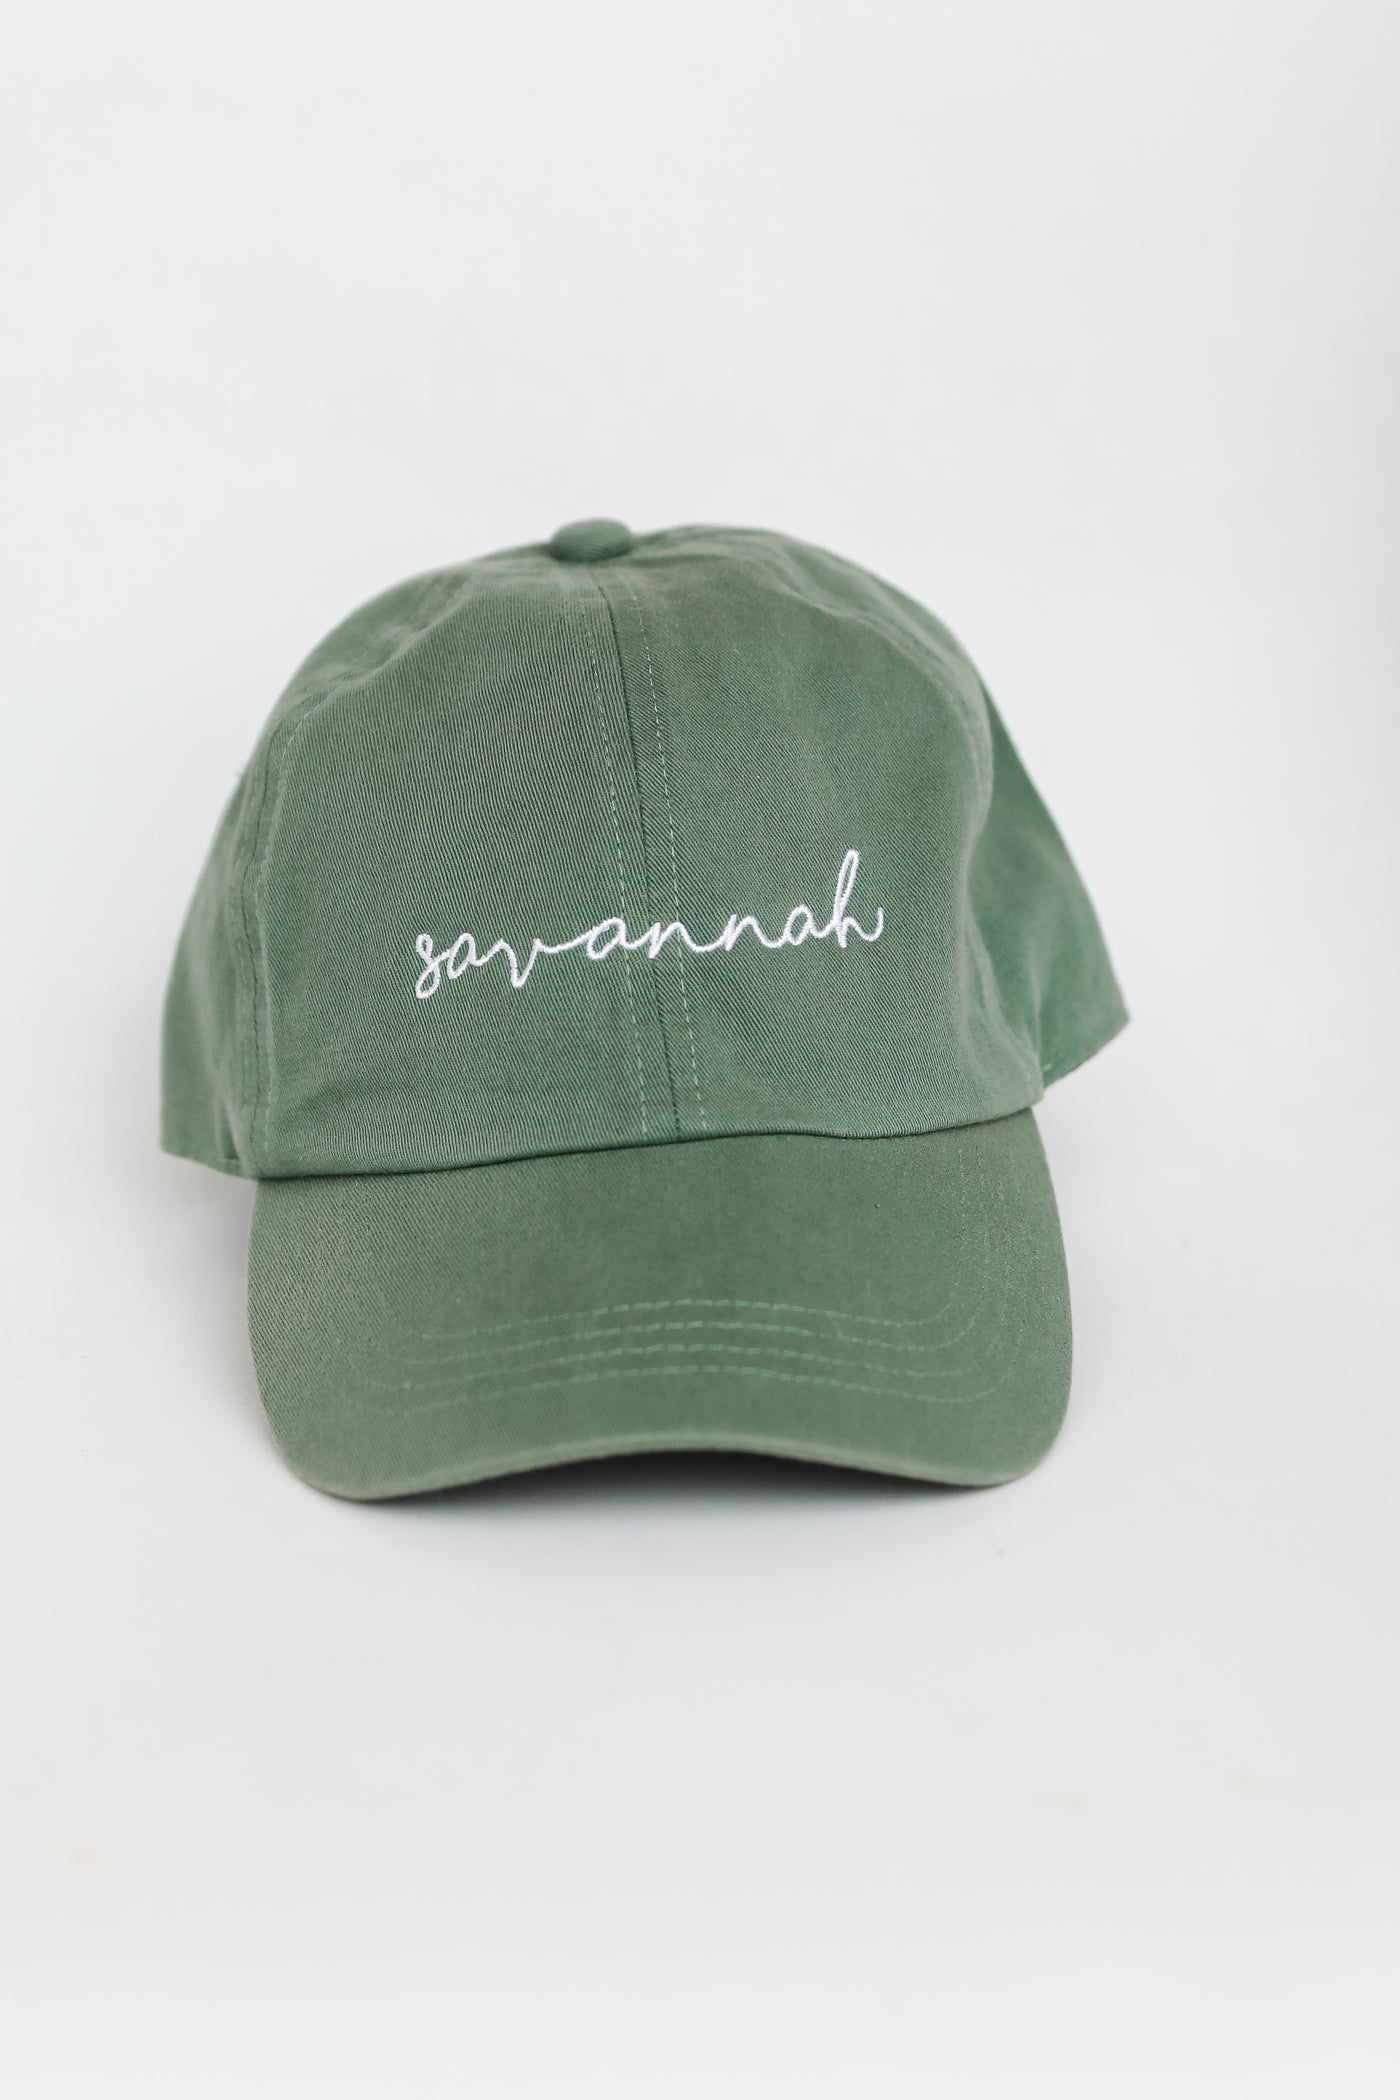 green Savannah Embroidered Hat flat lay